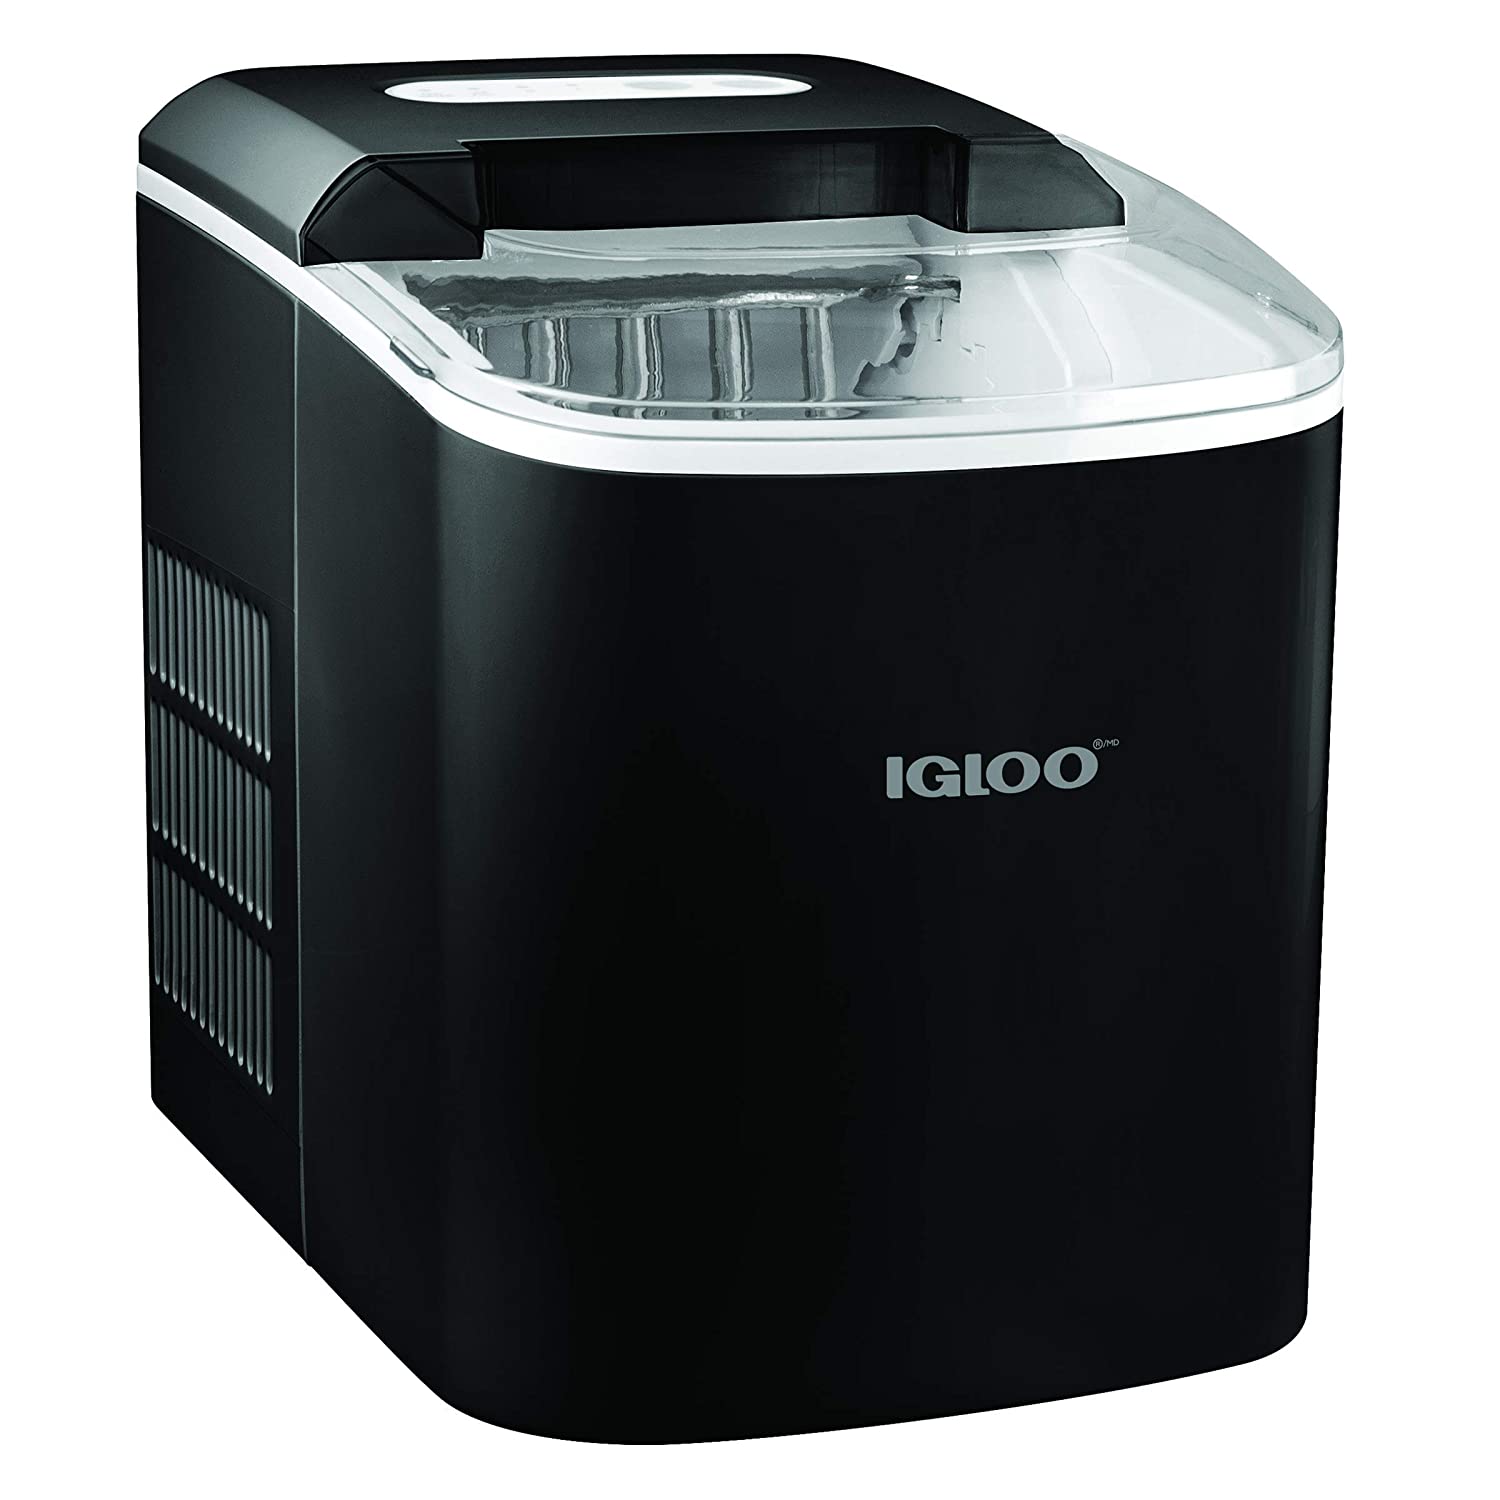 Igloo Portable Automatic Ice Maker